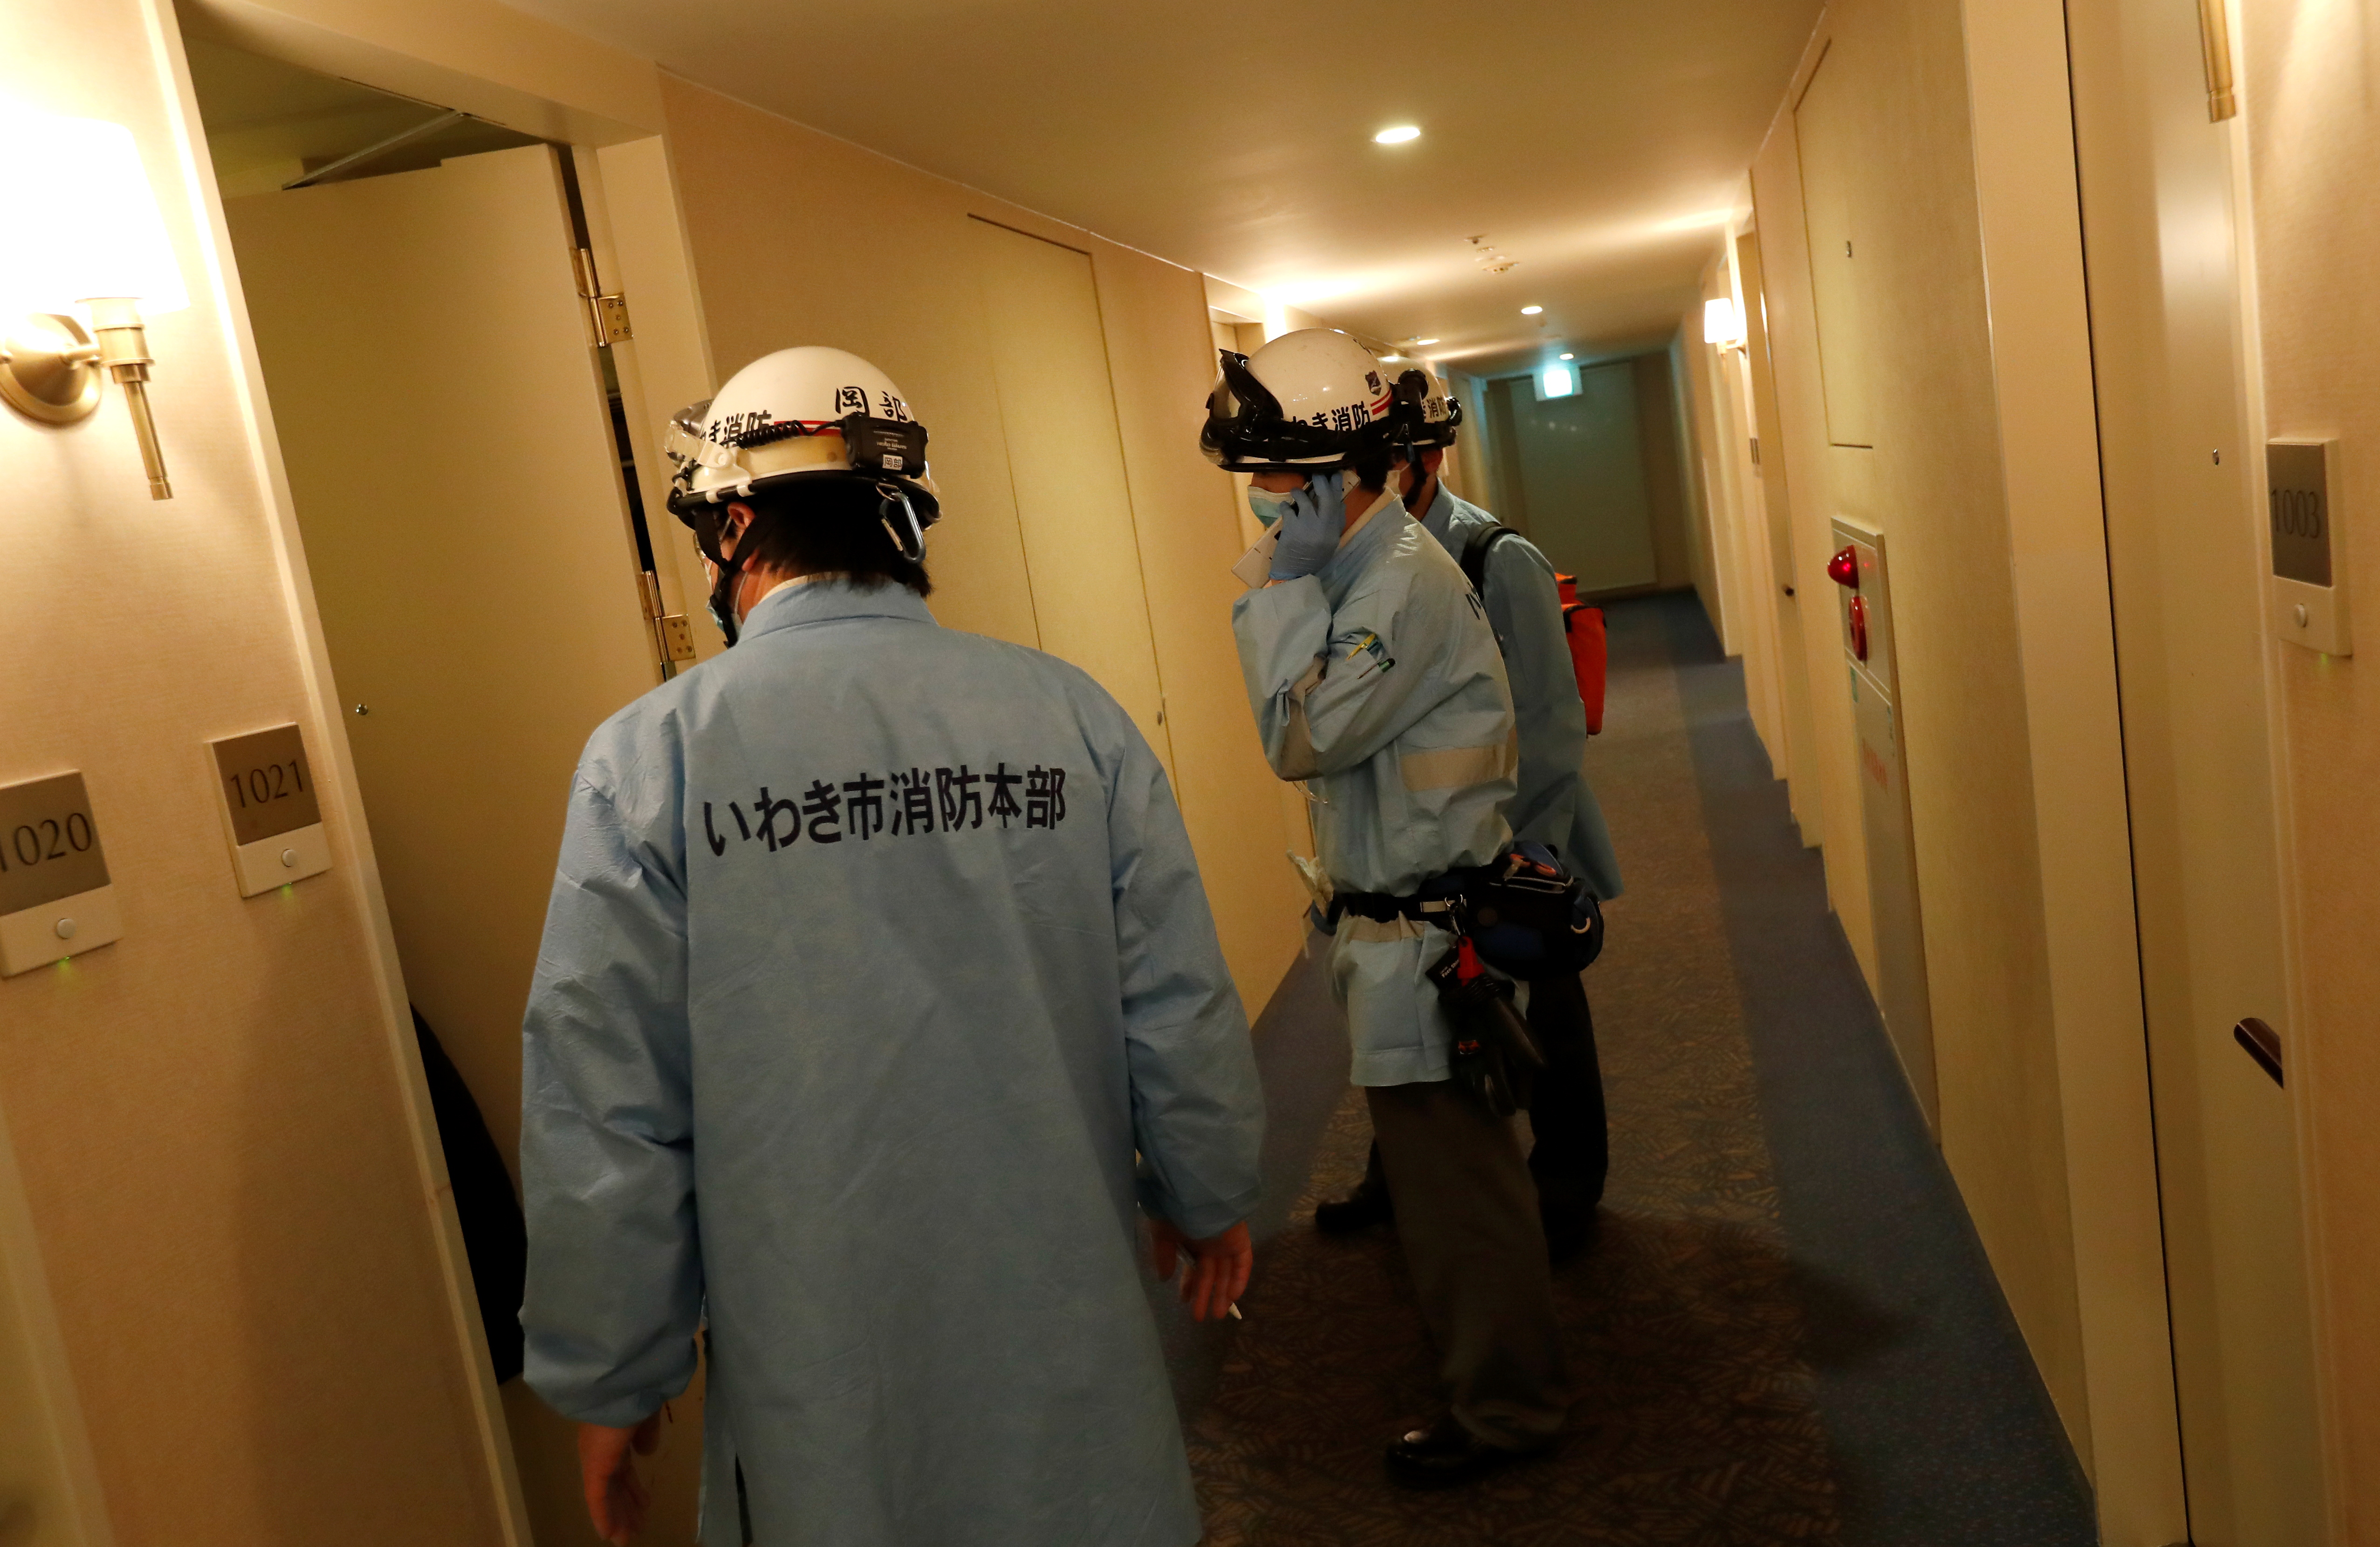 Ambulance crew members stand in the hotel corridor following a strong earthquake in Iwaki, Fukushima prefecture, Japan February 13, 2021.  REUTERS/Issei Kato